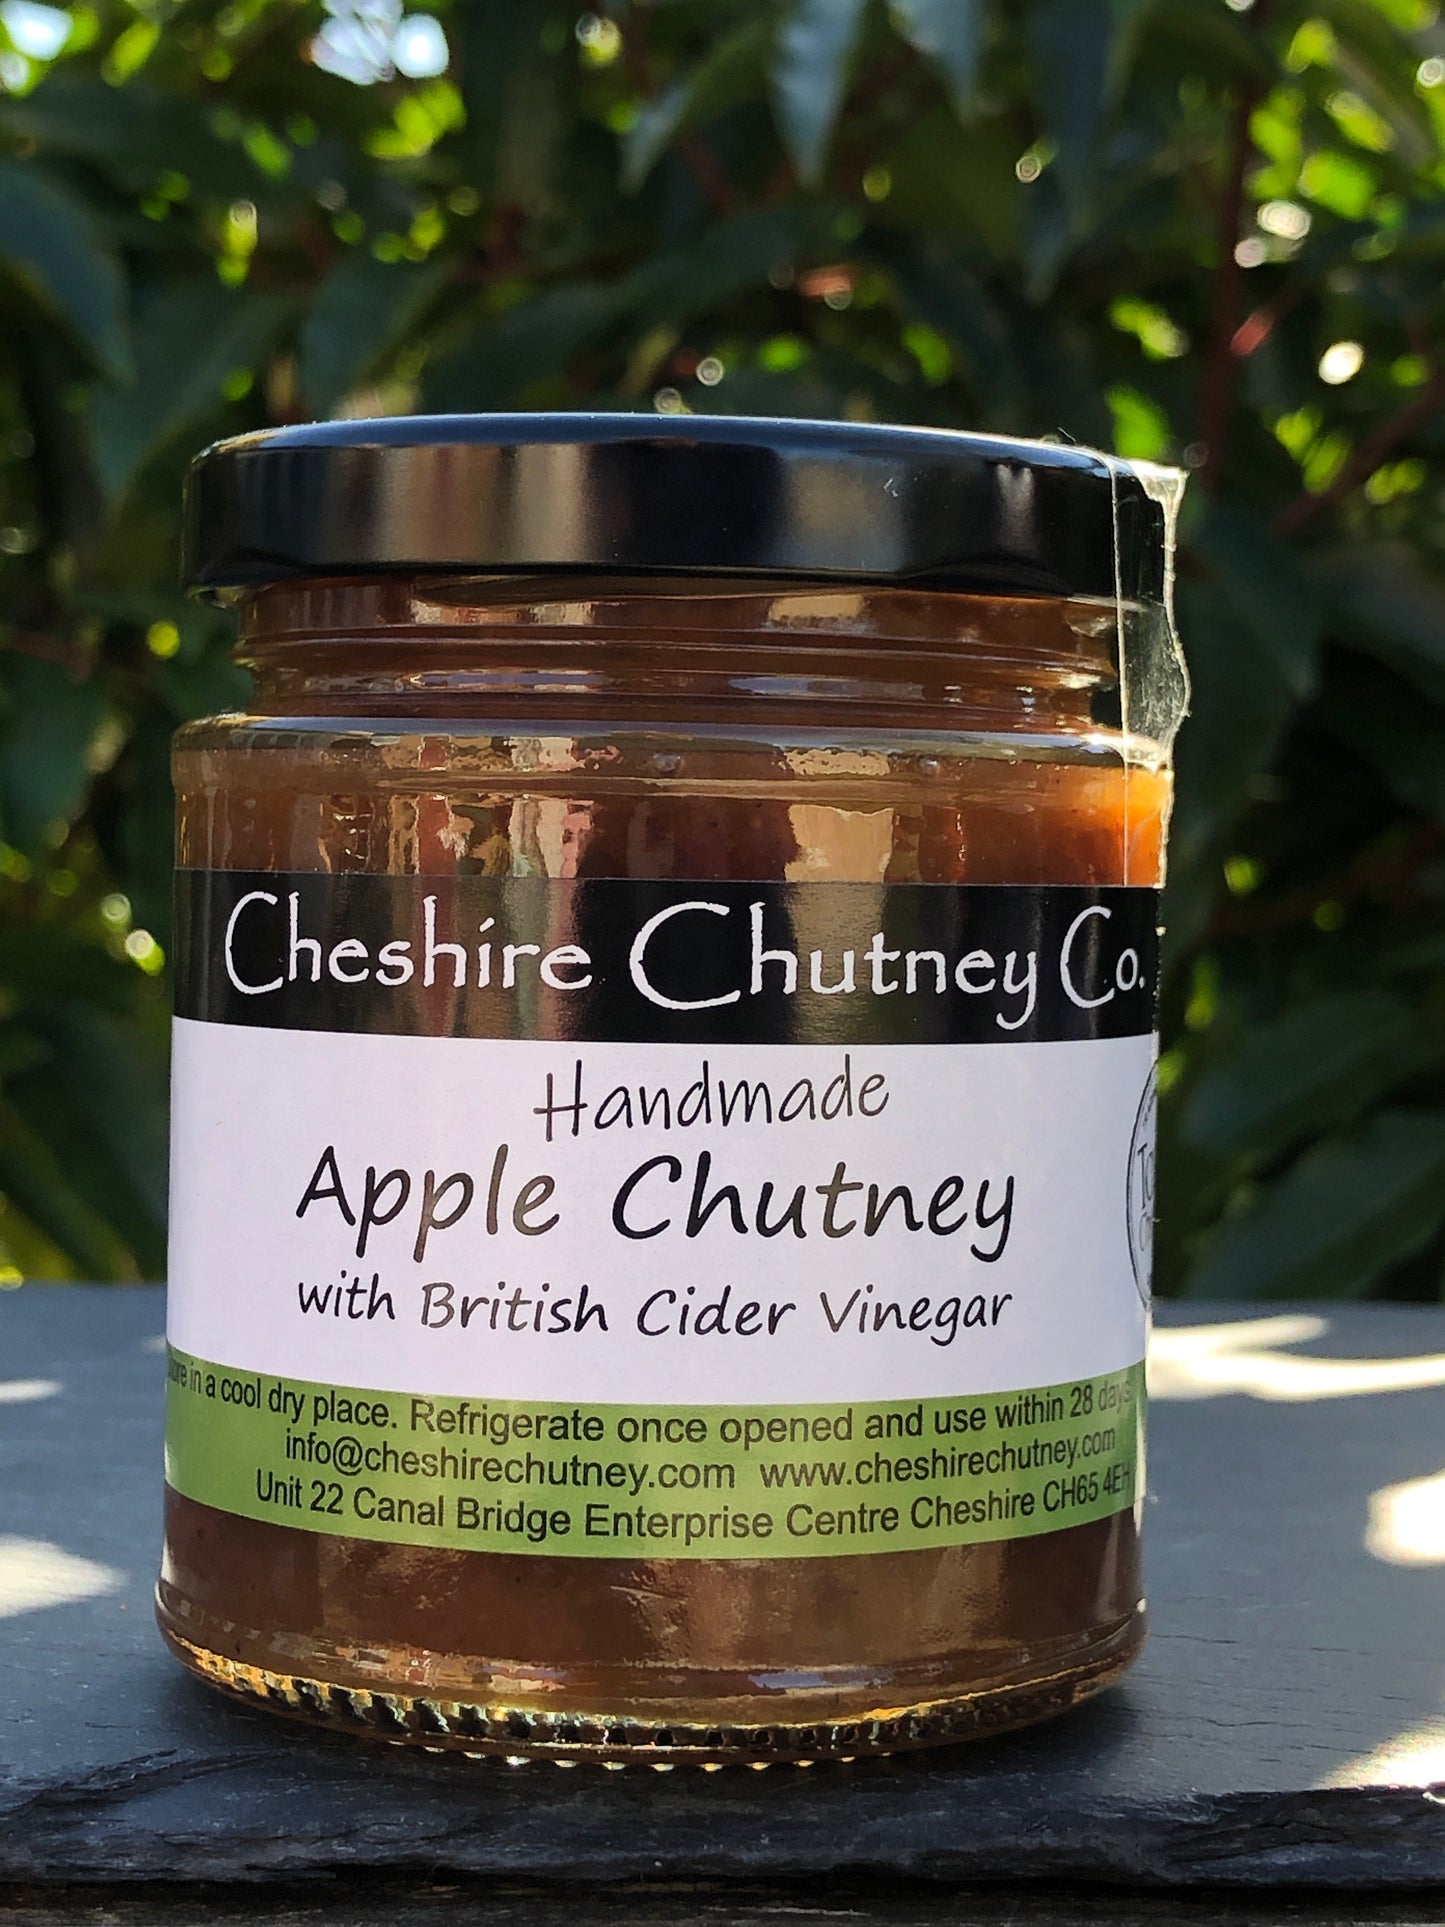 Cheshire Chutney Company - Apple Chutney